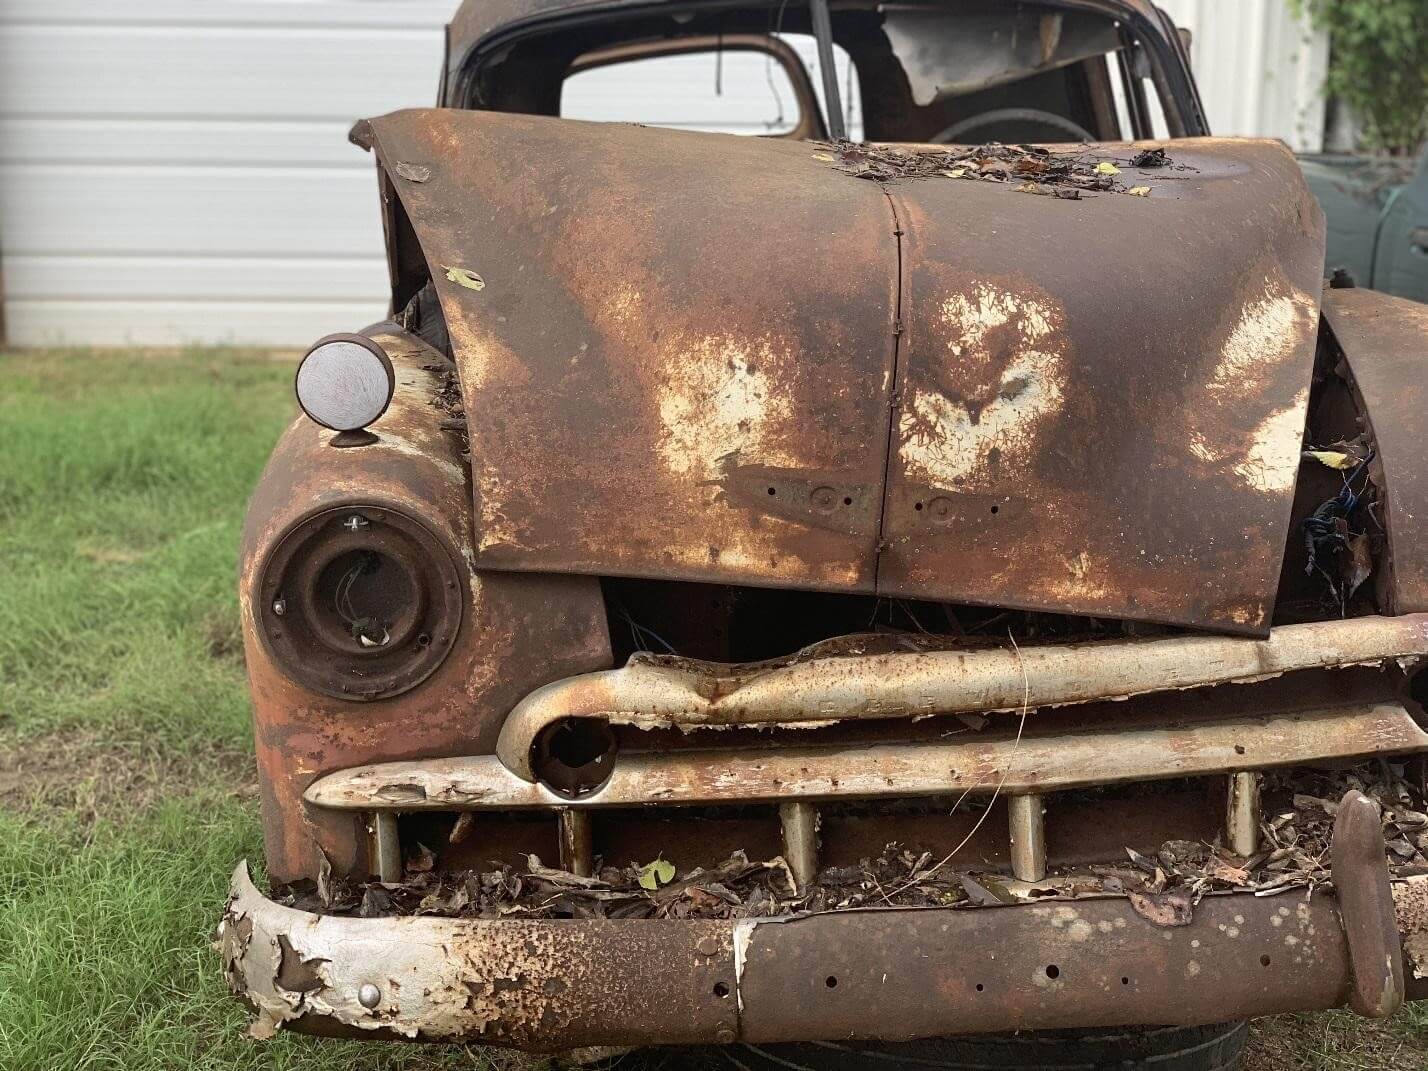 На фото – старый ржавый автомобиль